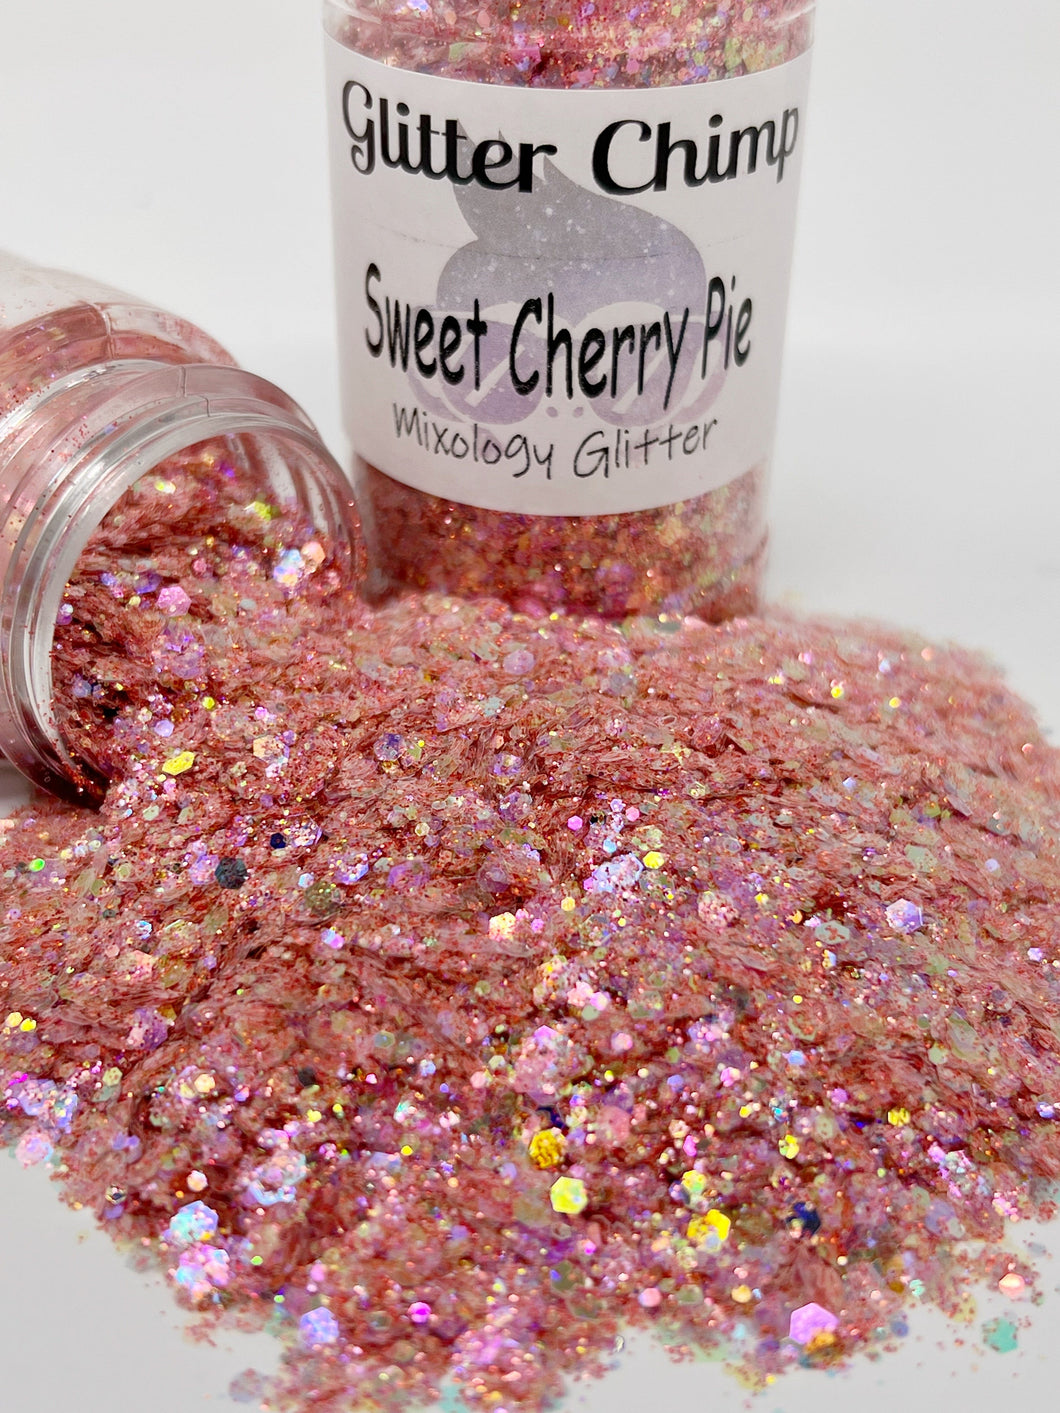 Sweet Cherry Pie - Mixology Glitter